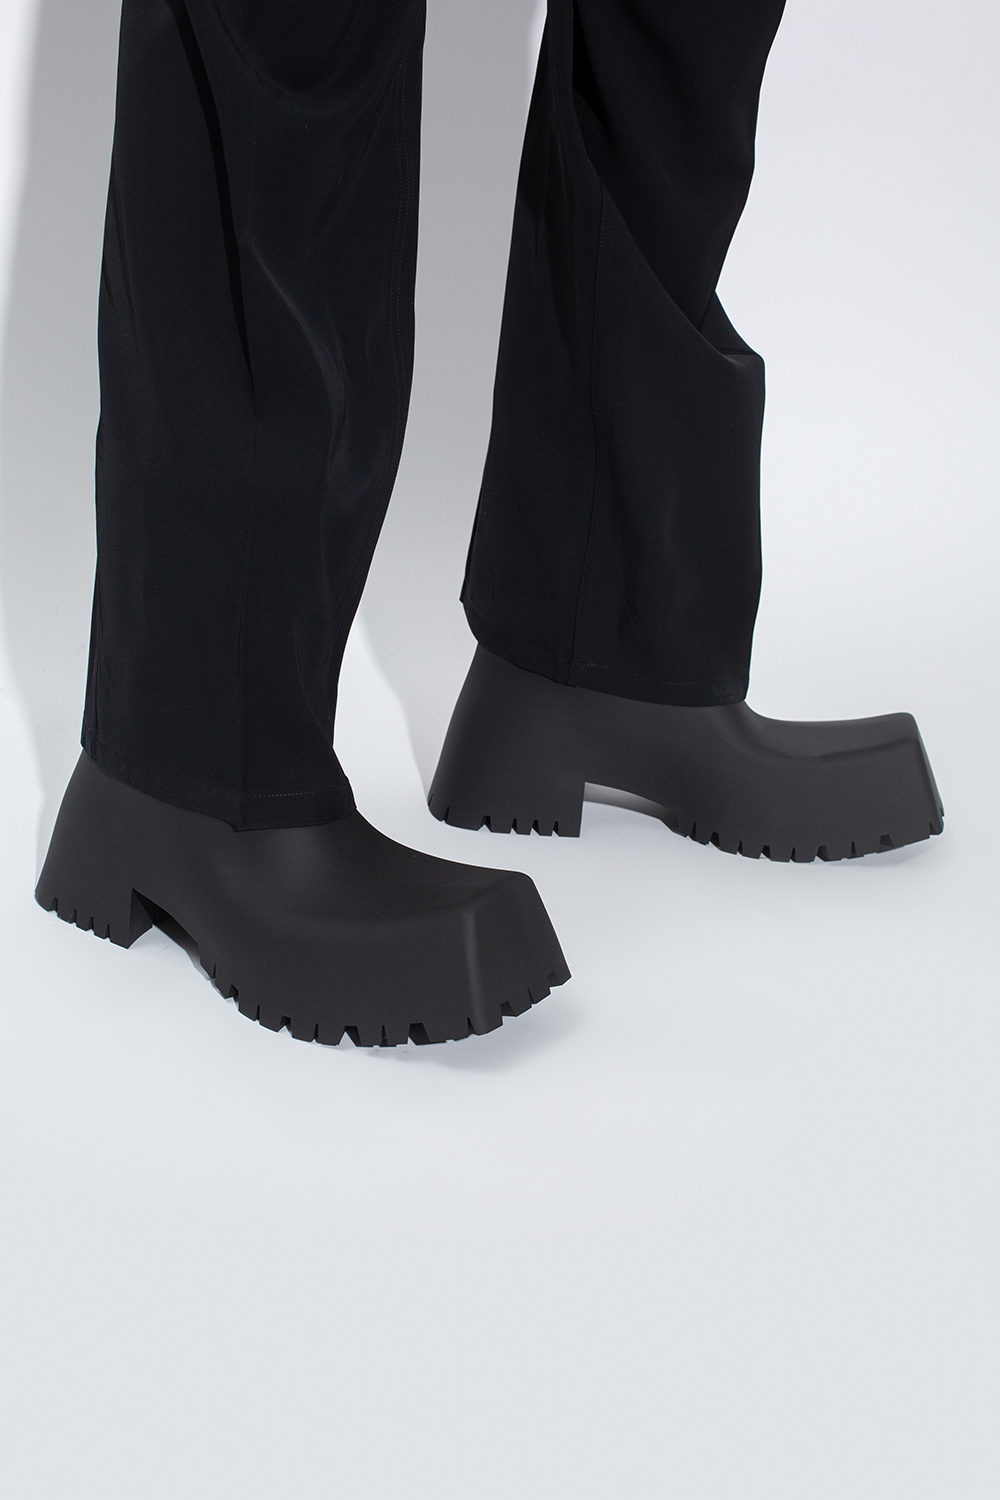 Black 'Trooper' rain boots Balenciaga - Vitkac Canada